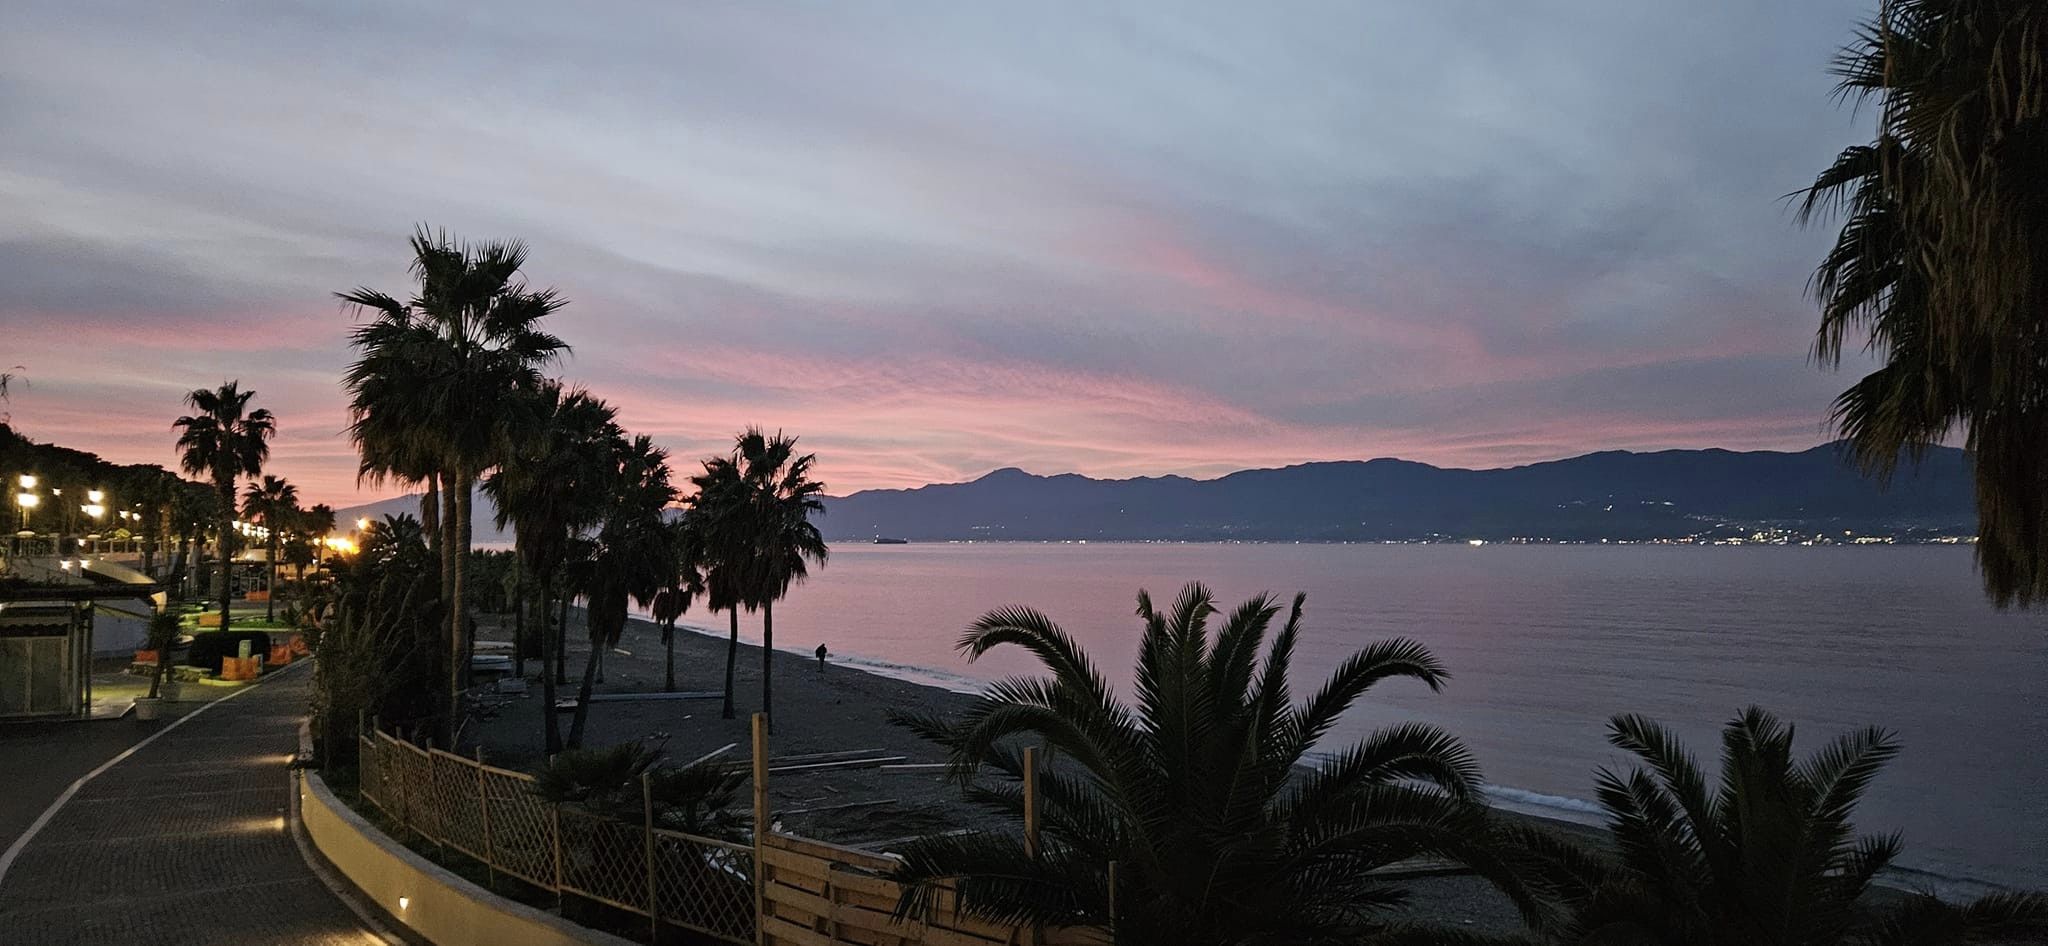 Sunset on the Strait of Messina, Reggio Calabria